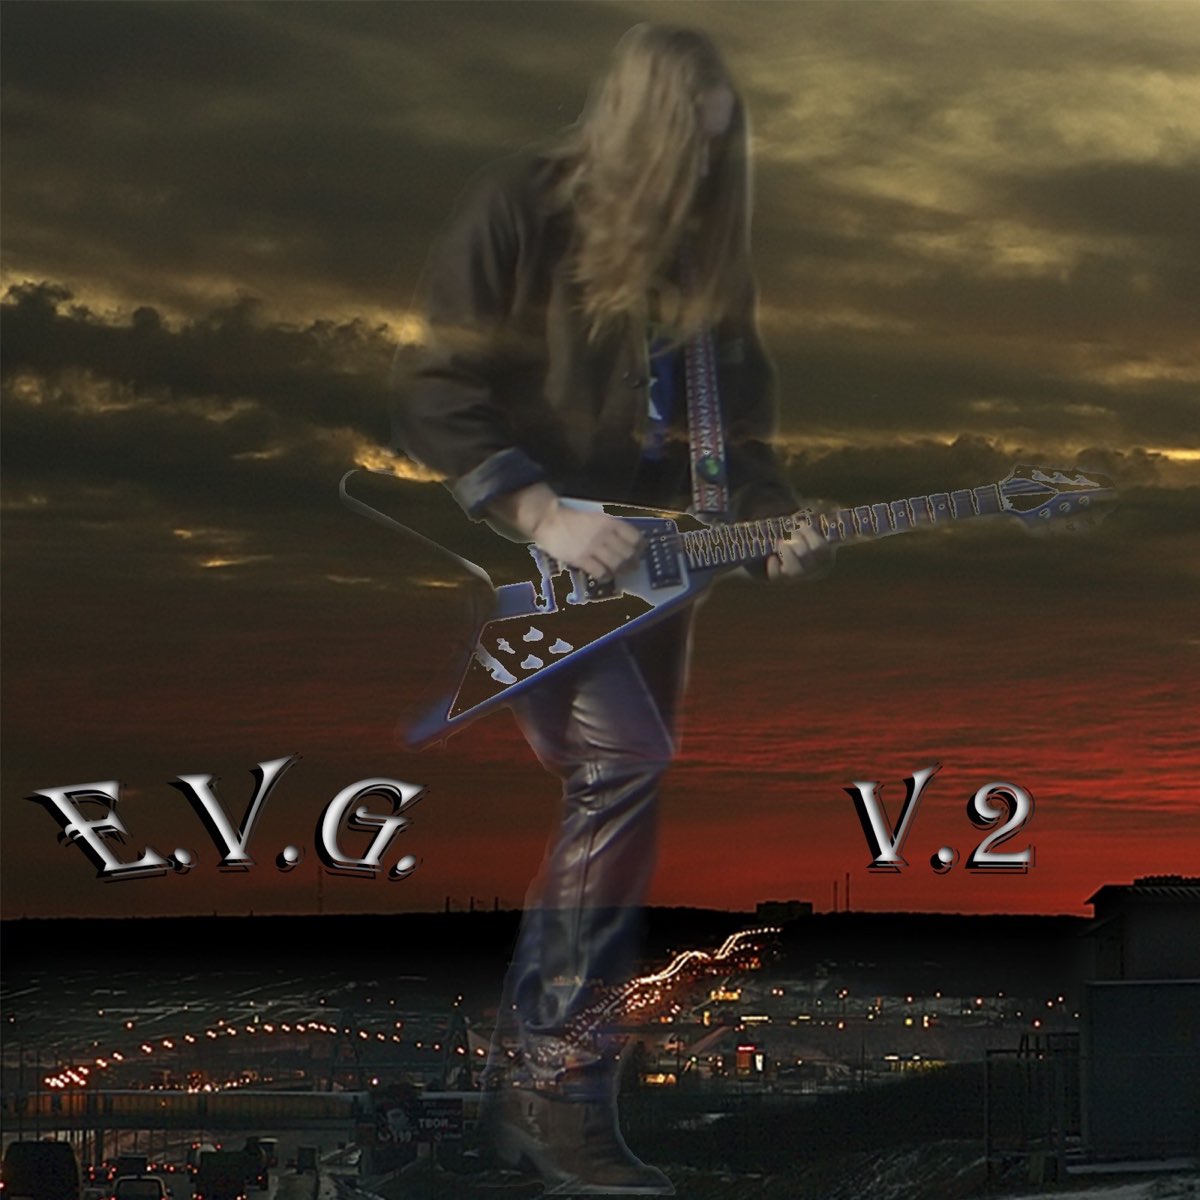 Альбом v. A.V.G песни. F.G Dreams. A v g песни 25